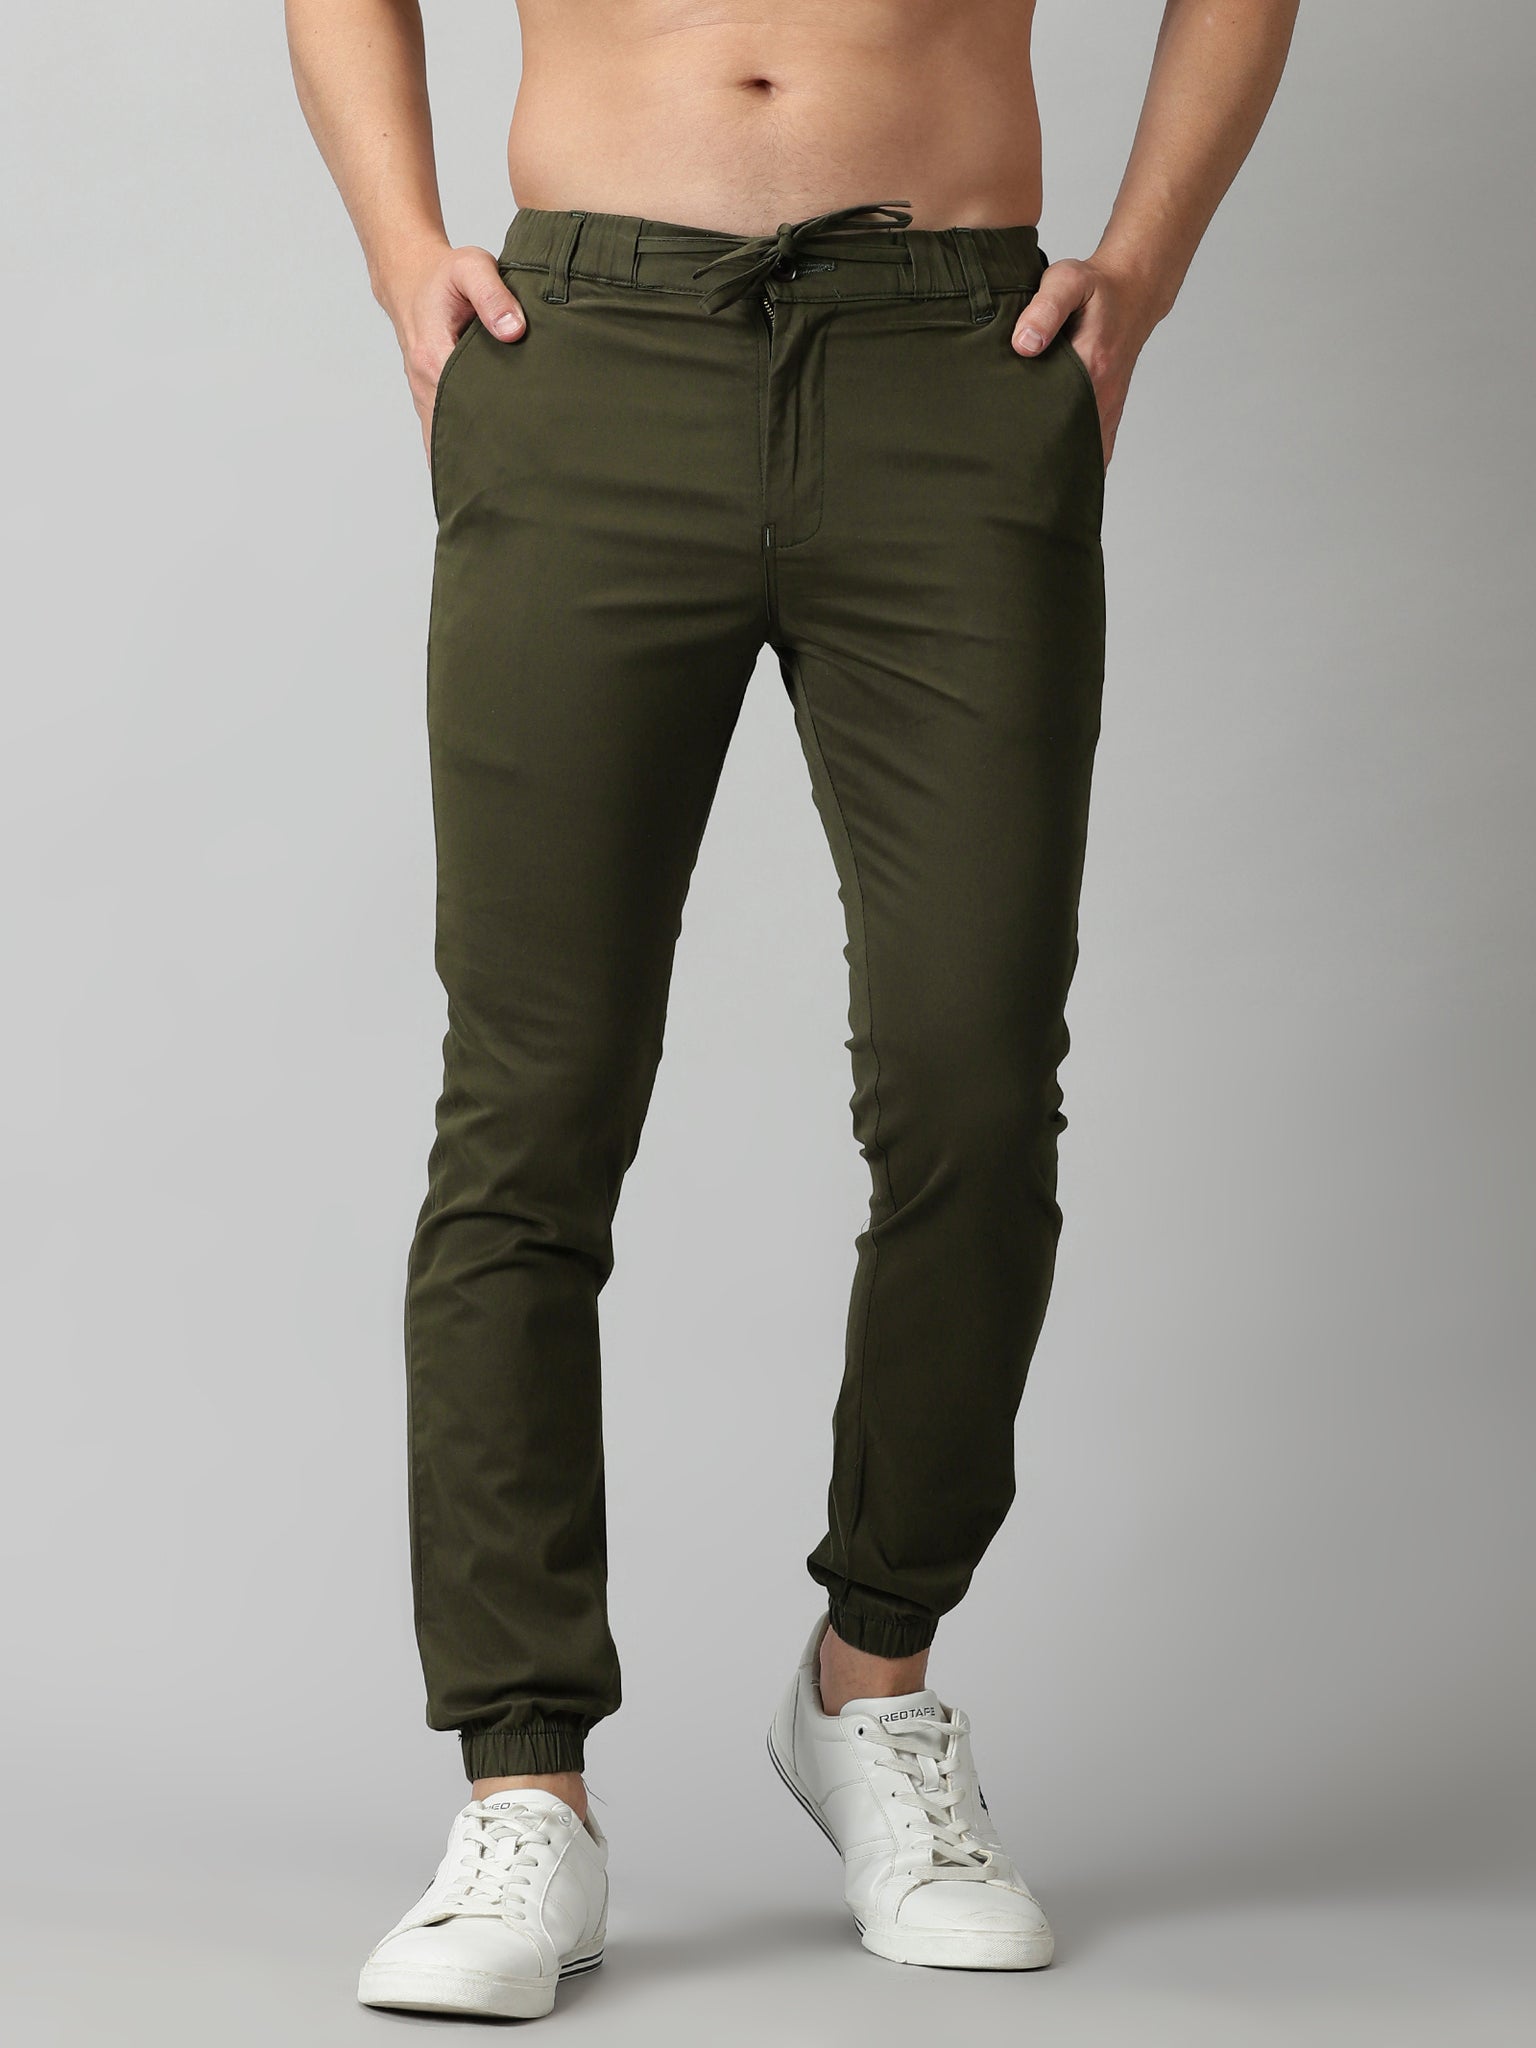 Buy Women Olive Regular Fit Solid Casual Jogger Pants Online - 654560 |  Allen Solly